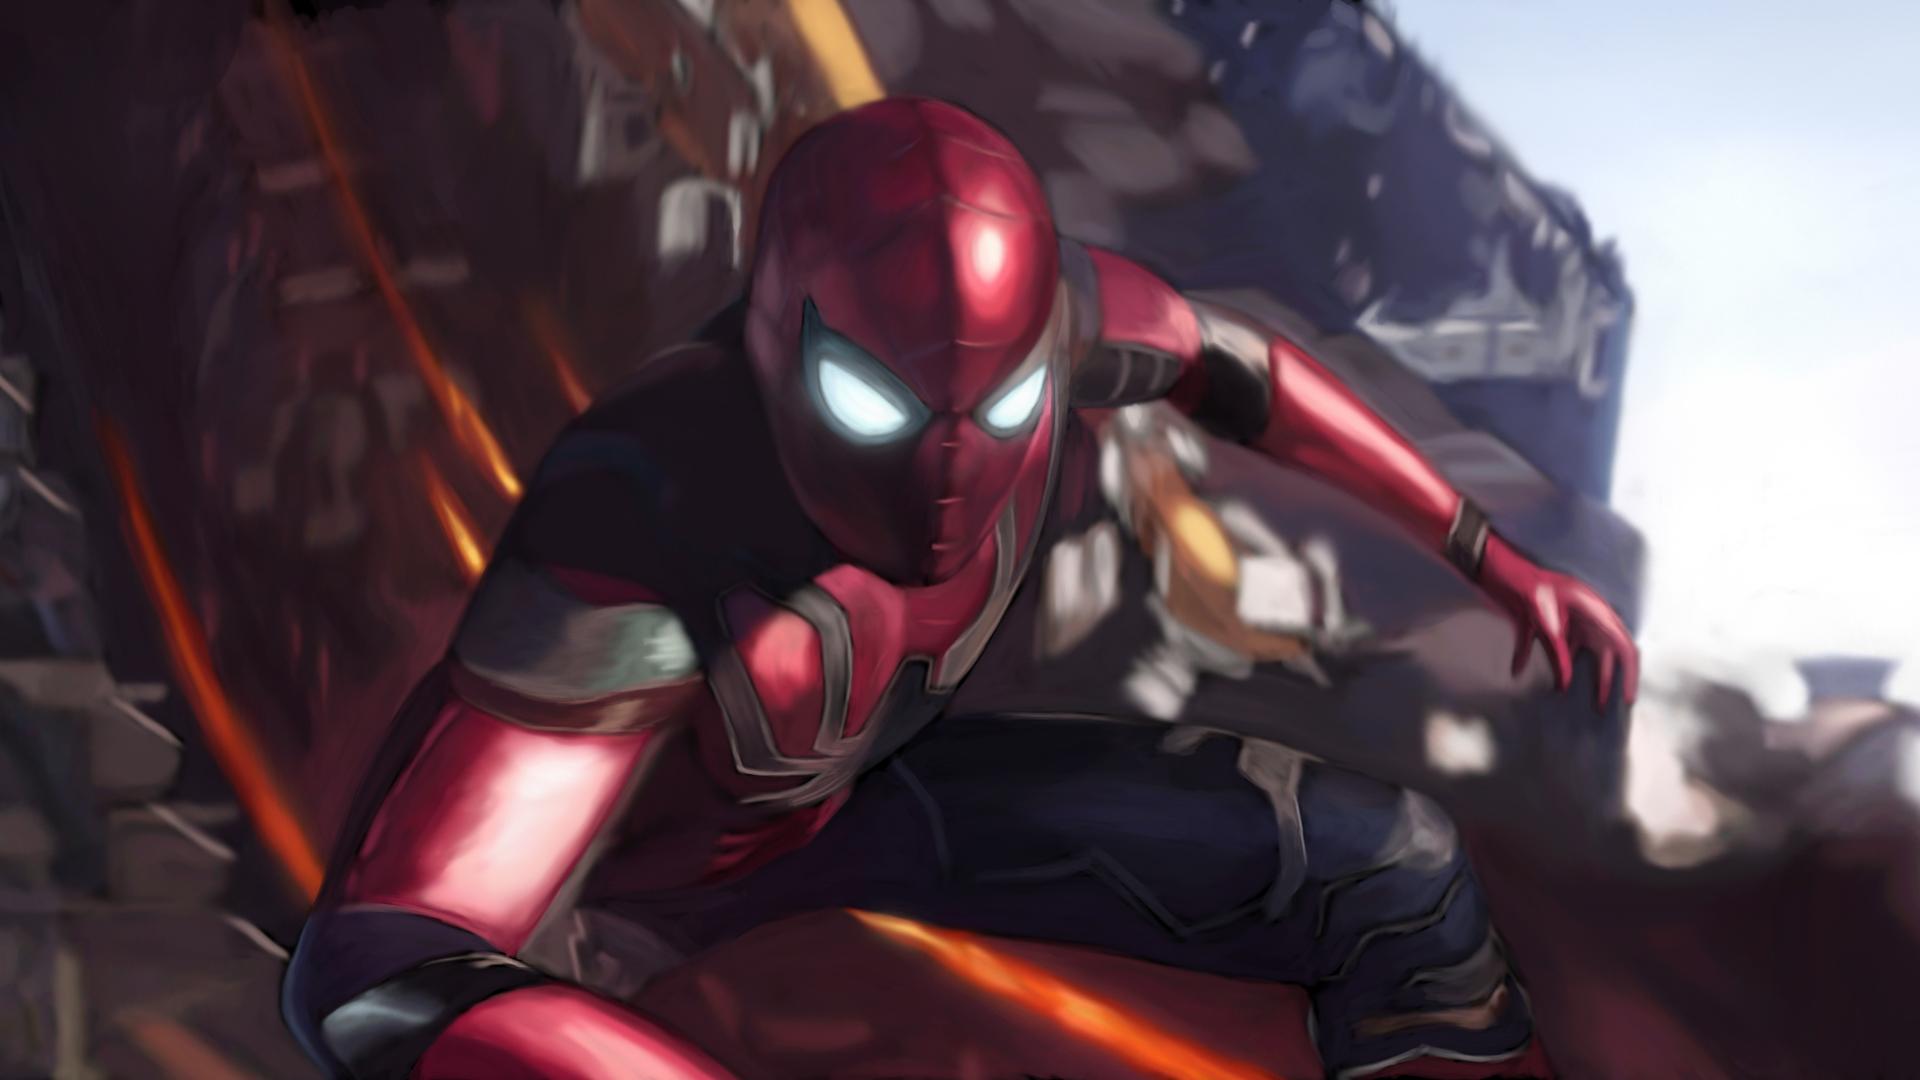 Spiderman New Suit In Infinity War 4k Laptop Full HD 1080P